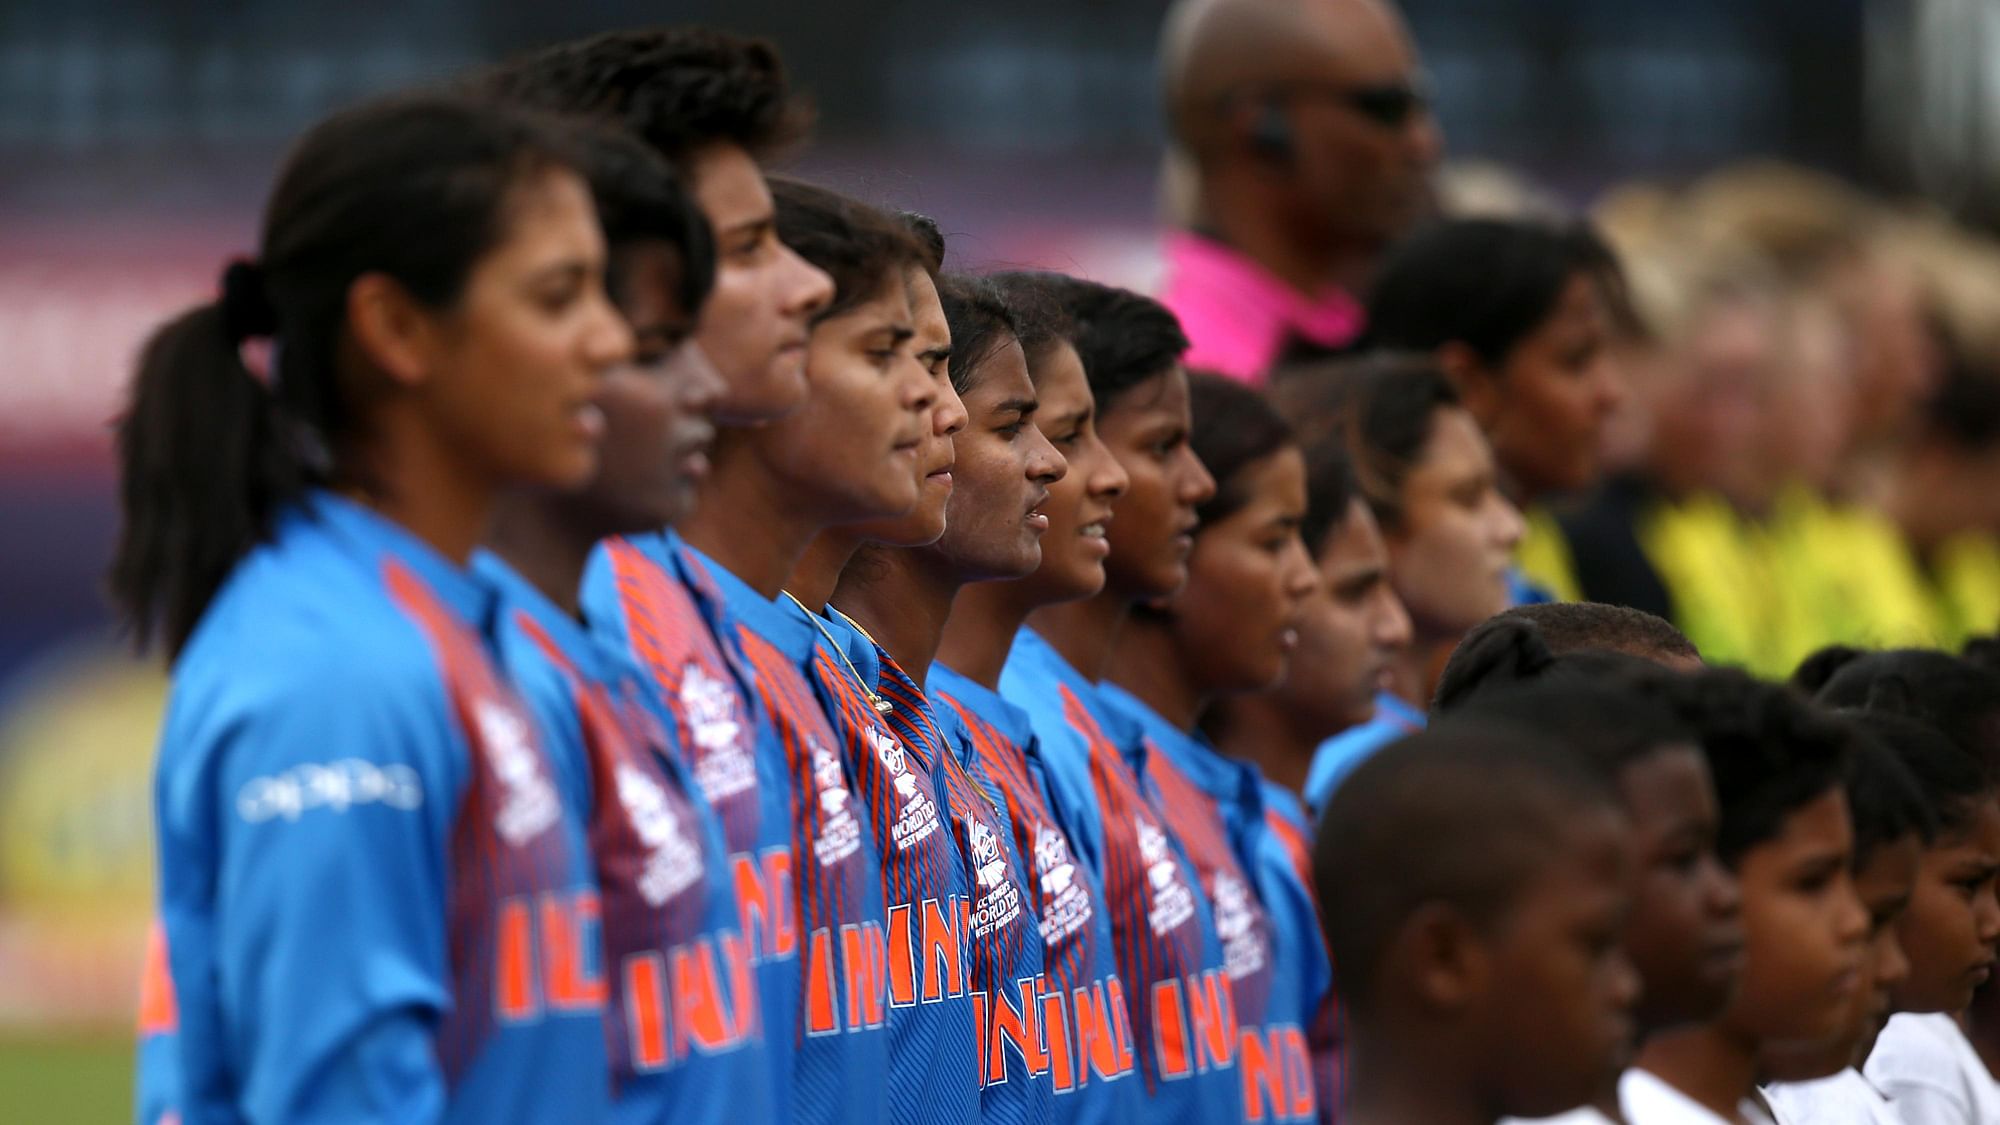 India vs Australia (IND W vs AUS W) Women’s T20 World Cup 2020 Live Streaming Online